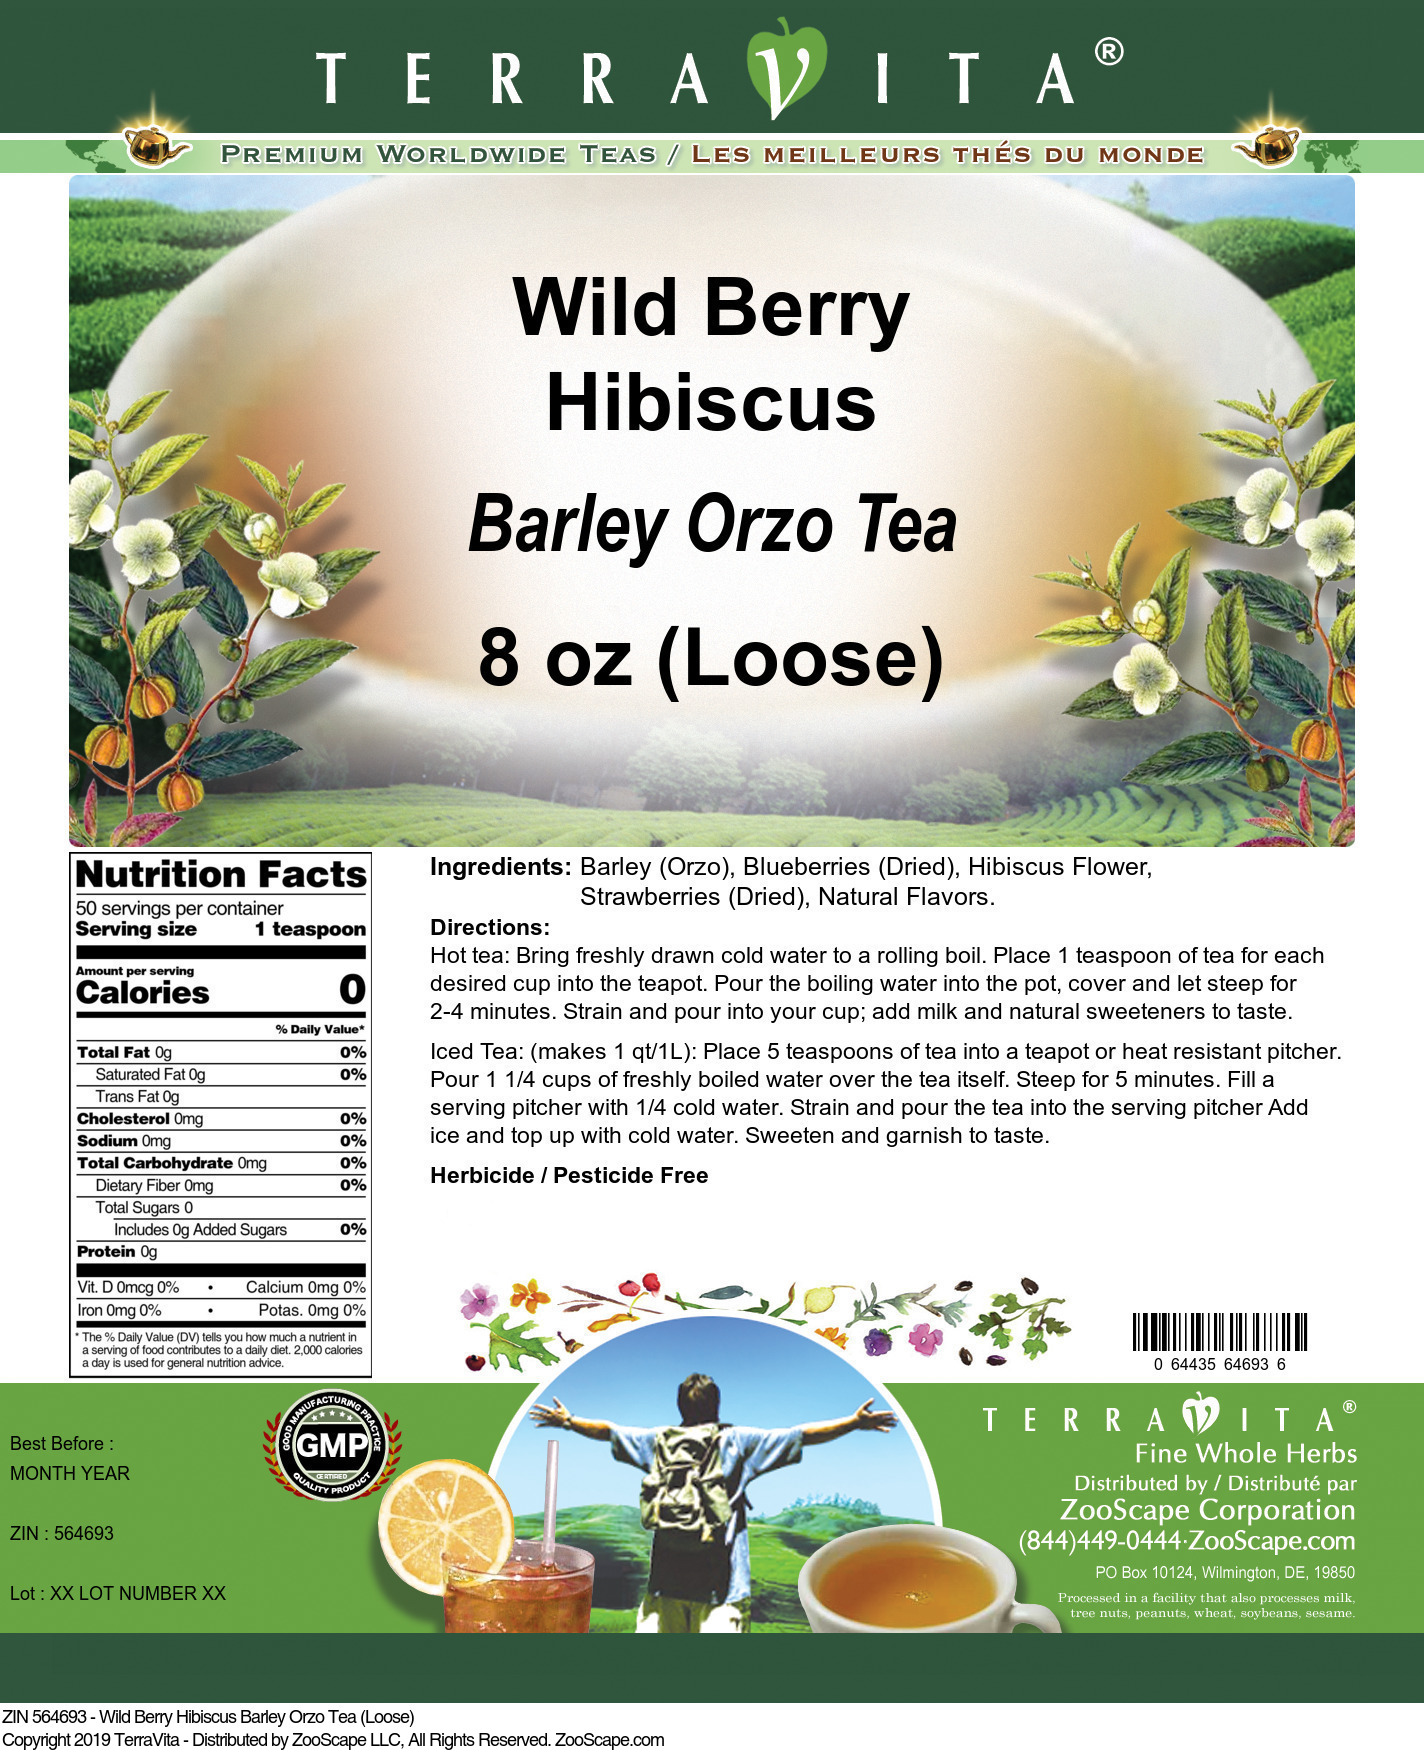 Wild Berry Hibiscus Barley Orzo Tea (Loose) - Label